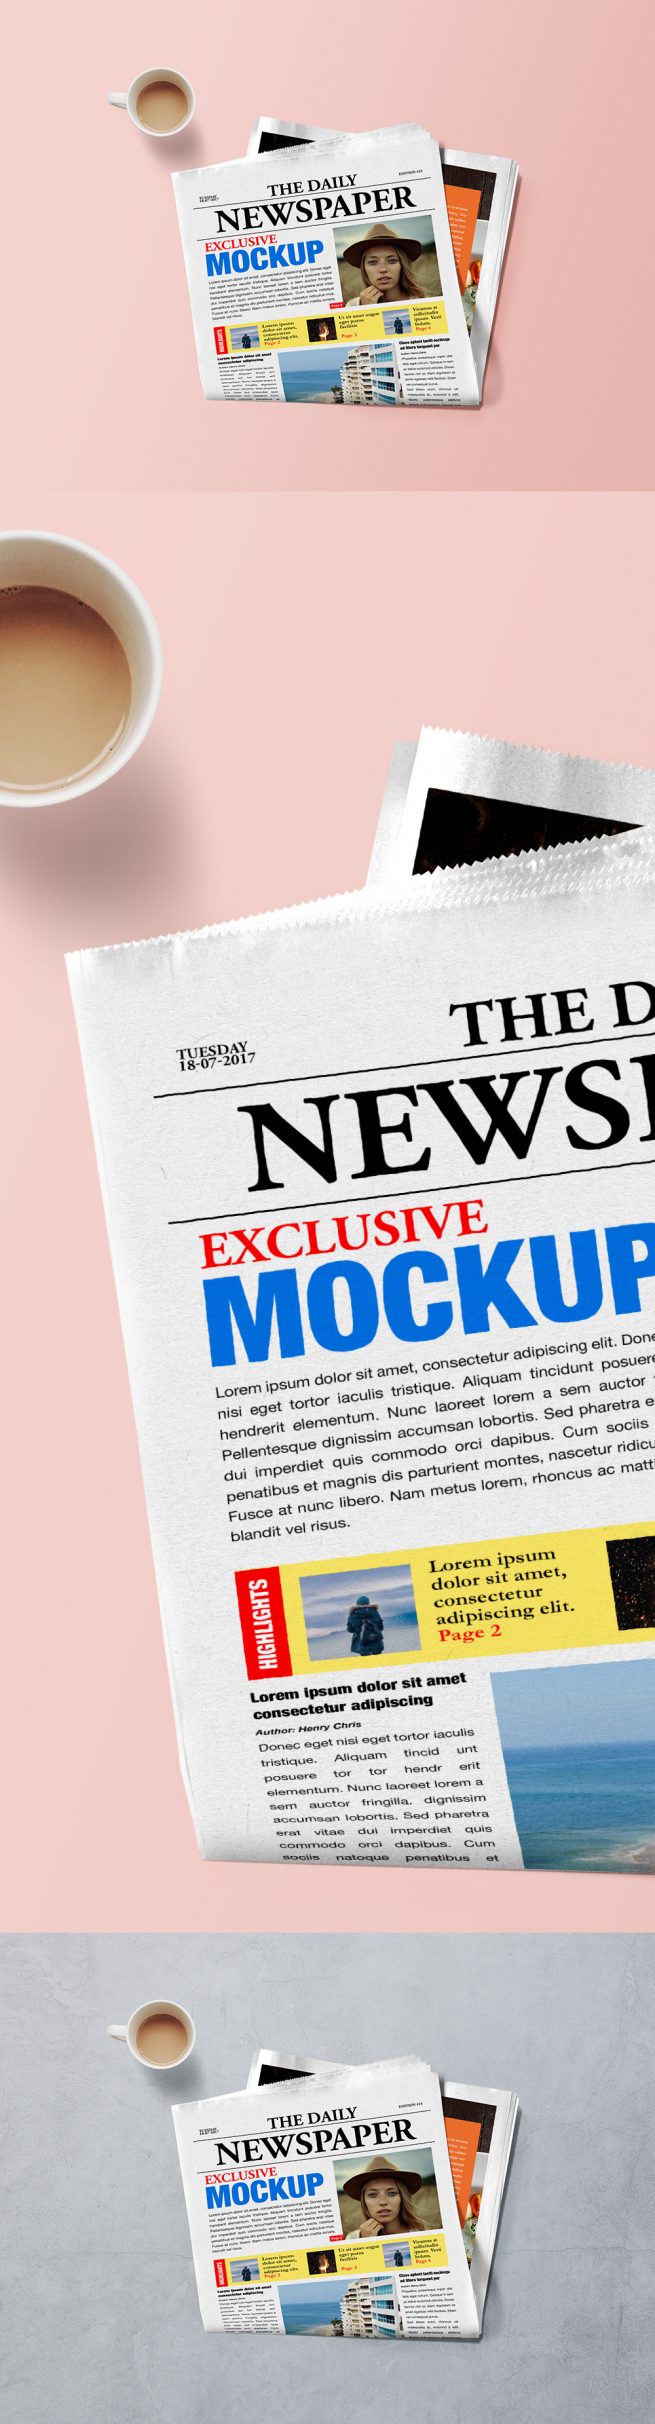 Newspaper Mockup PSD - GraphicsFuel